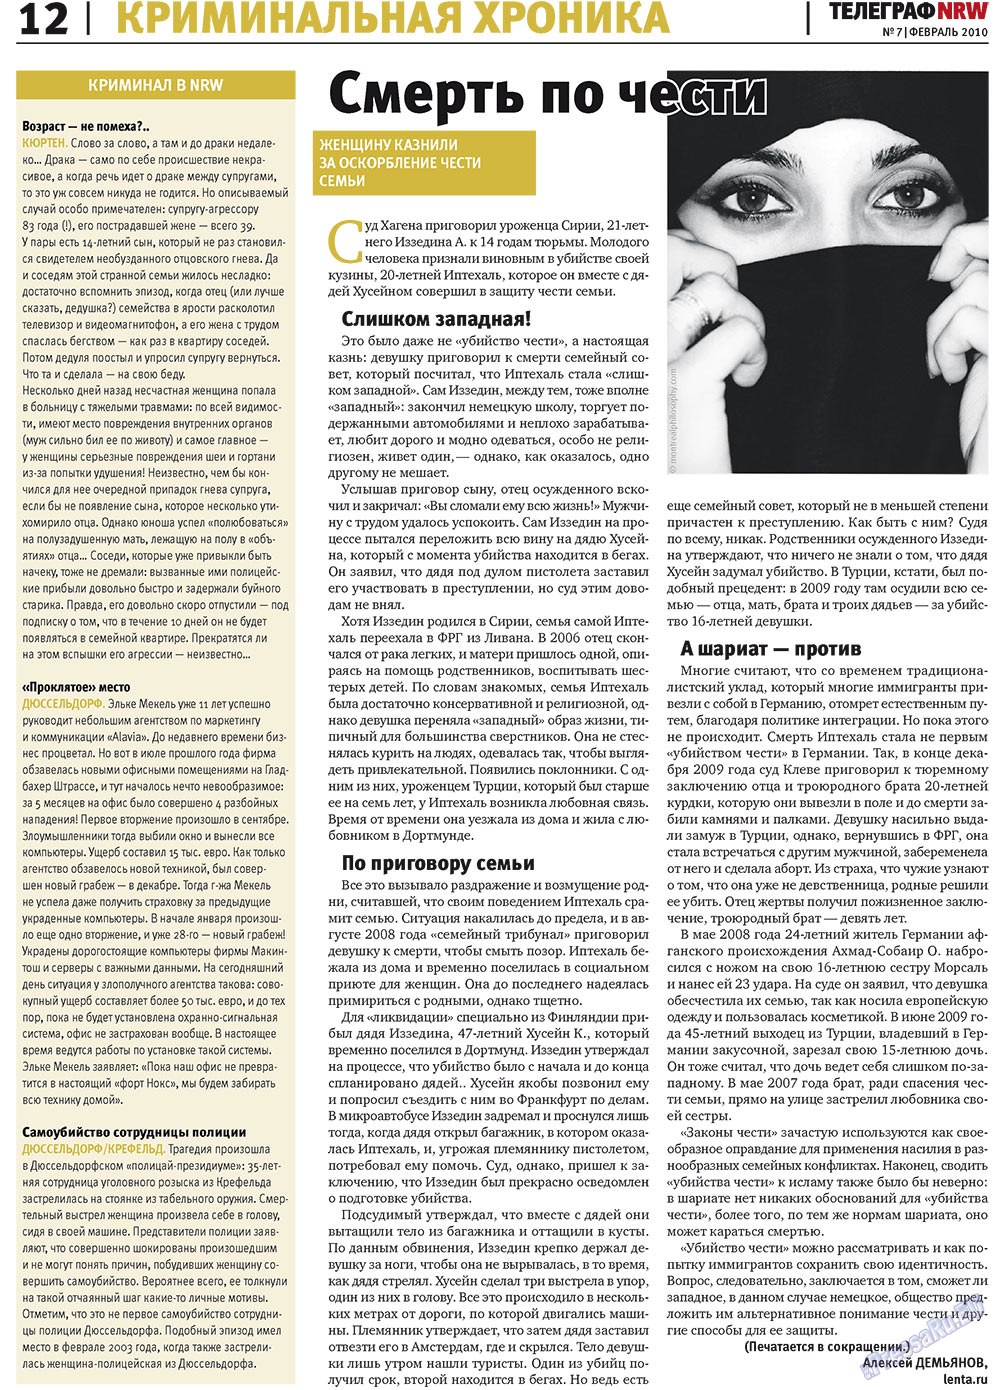 Телеграф NRW, газета. 2010 №2 стр.12